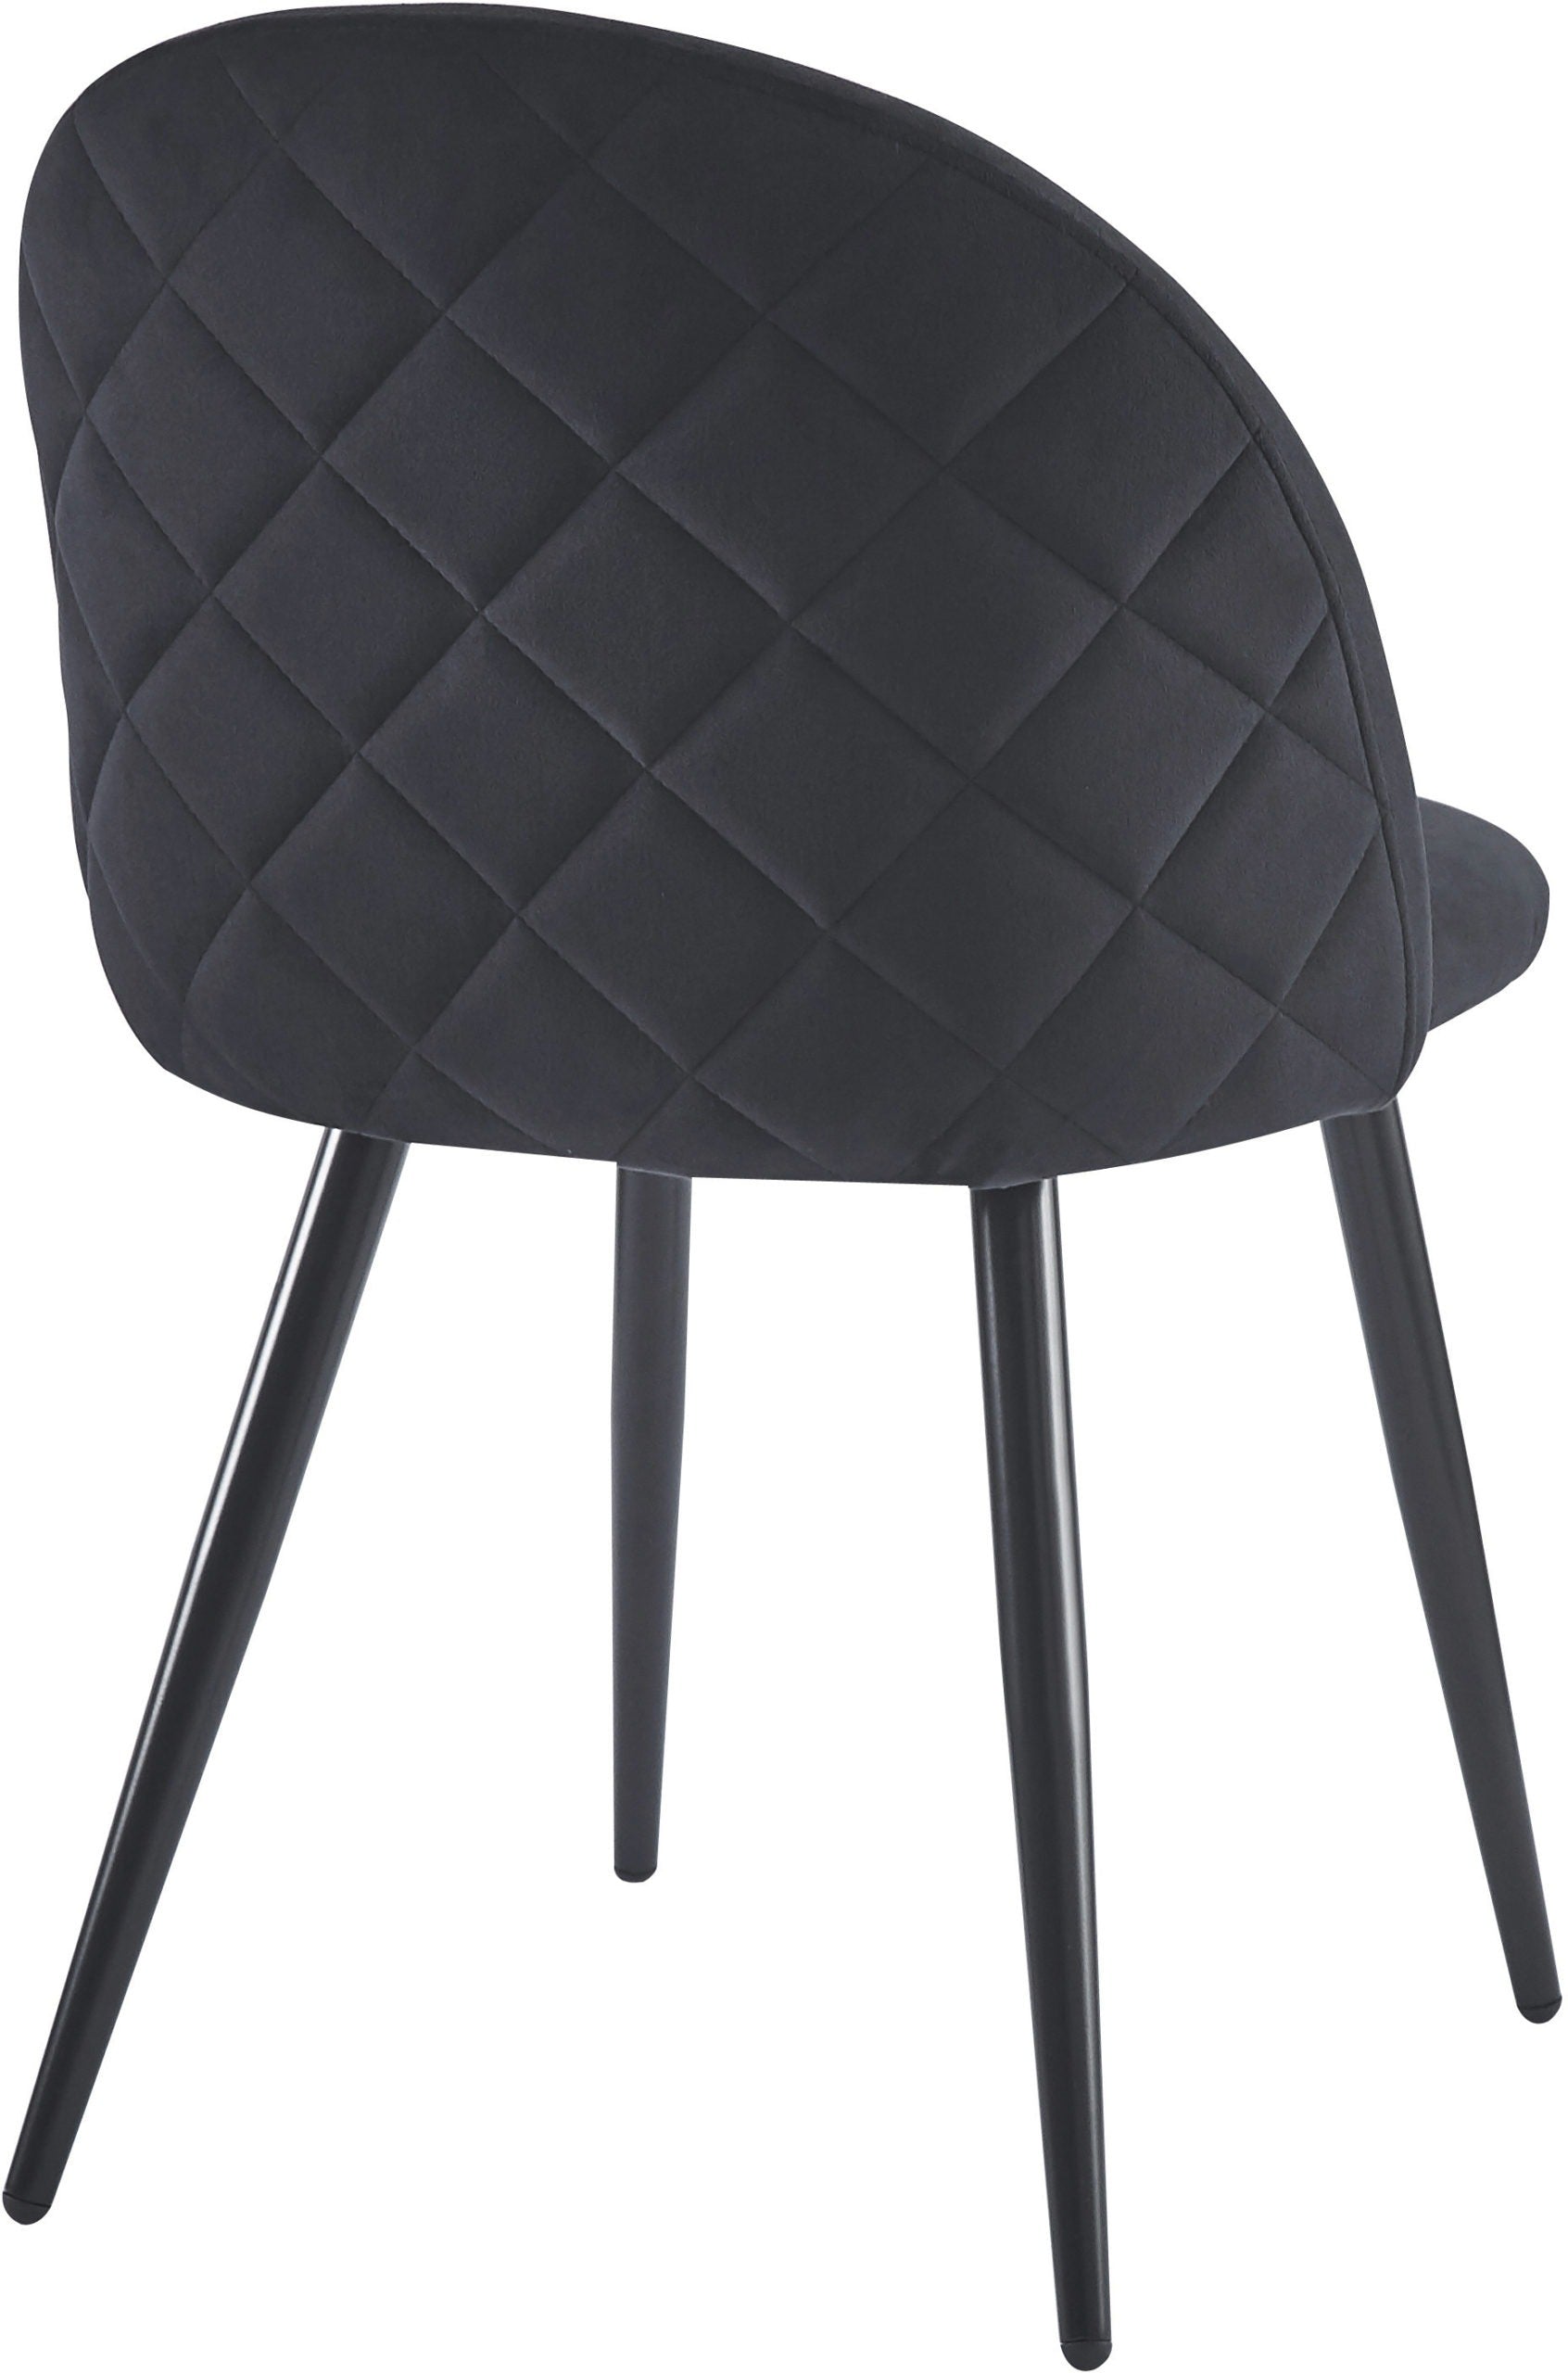 Marlow Chair - Black Velvet (4 Chairs)